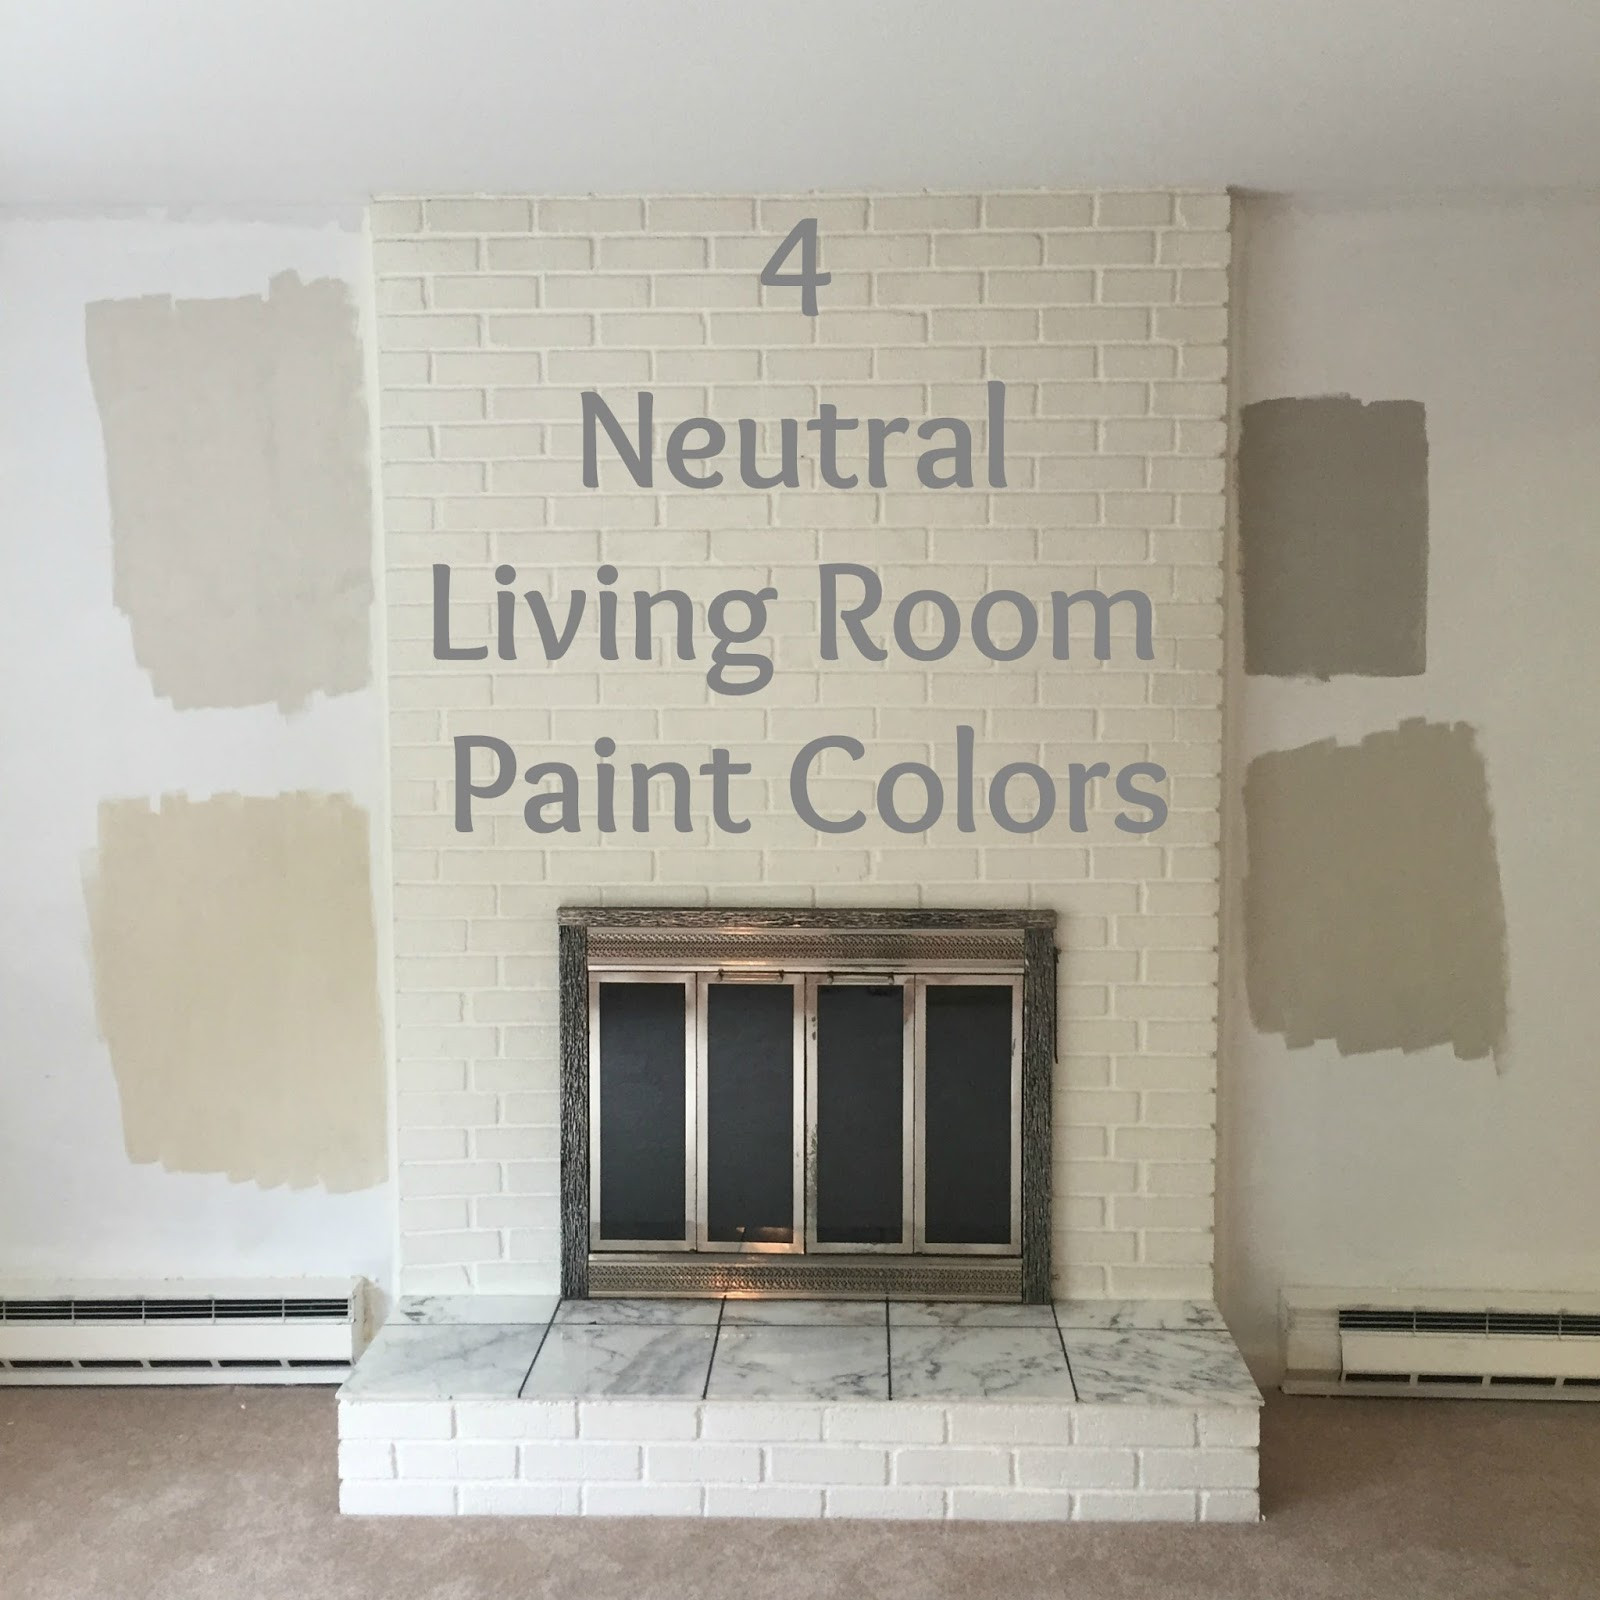 Neutral Color For Living Room
 Drew Danielle Design 4 Neutral Living Room Paint Colors